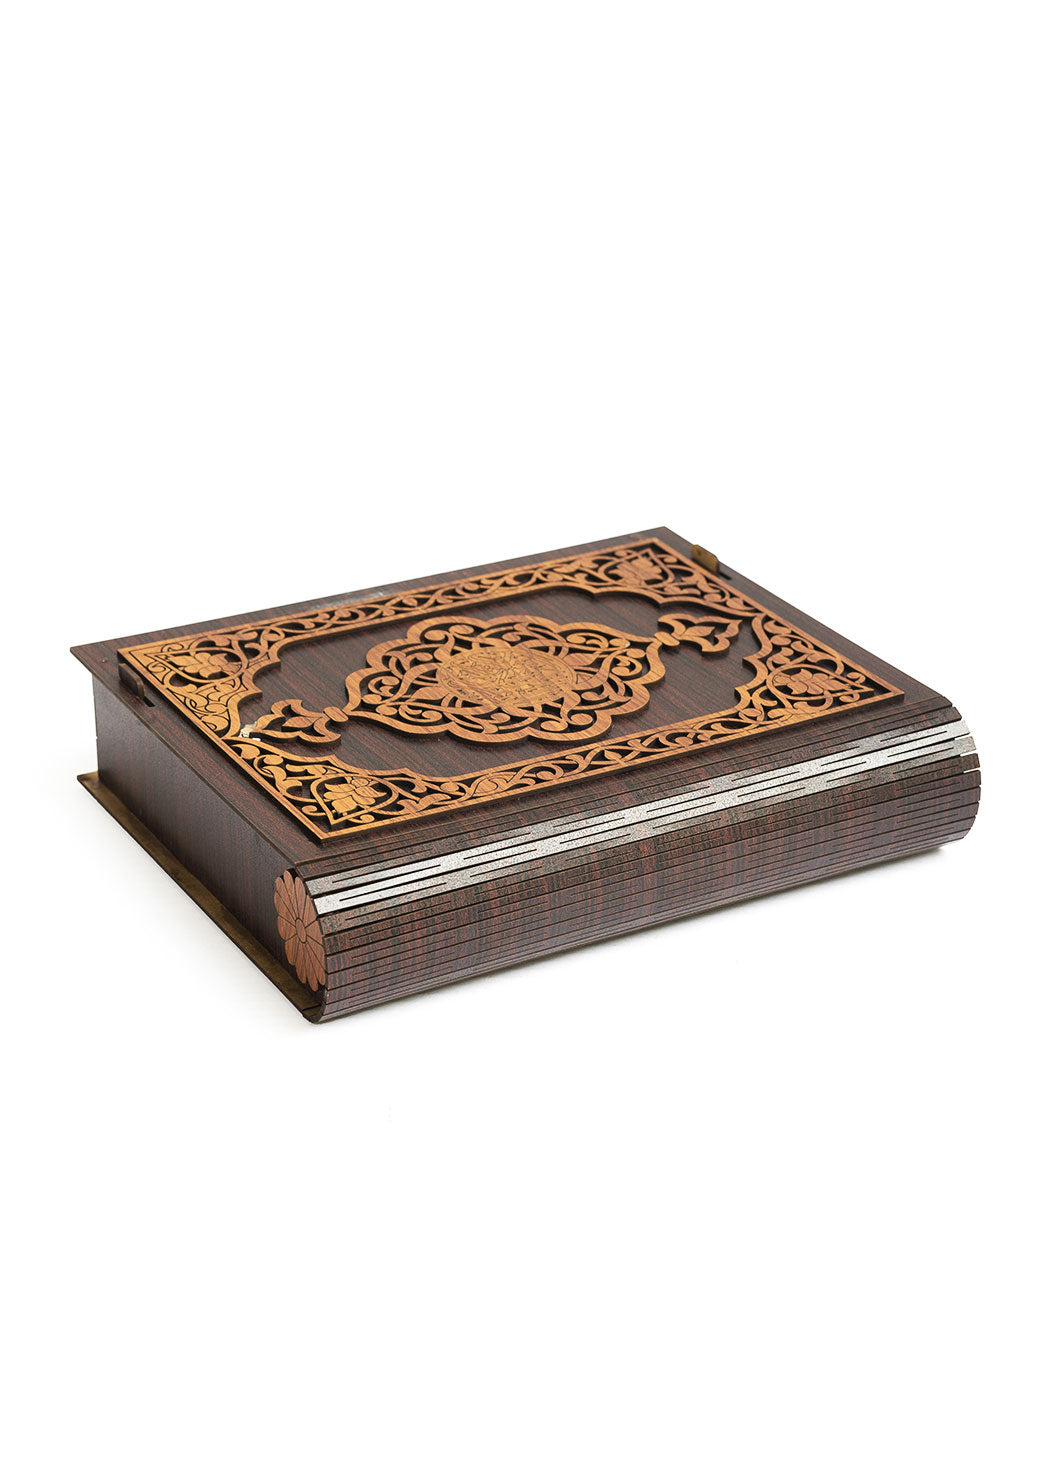 Dark Bown Wooden Box With Lighr Brown Carvin Gift Box For Quran - Wooden Juzdaan - Quran Ghilaf - Premium Wooden Box - For Quran